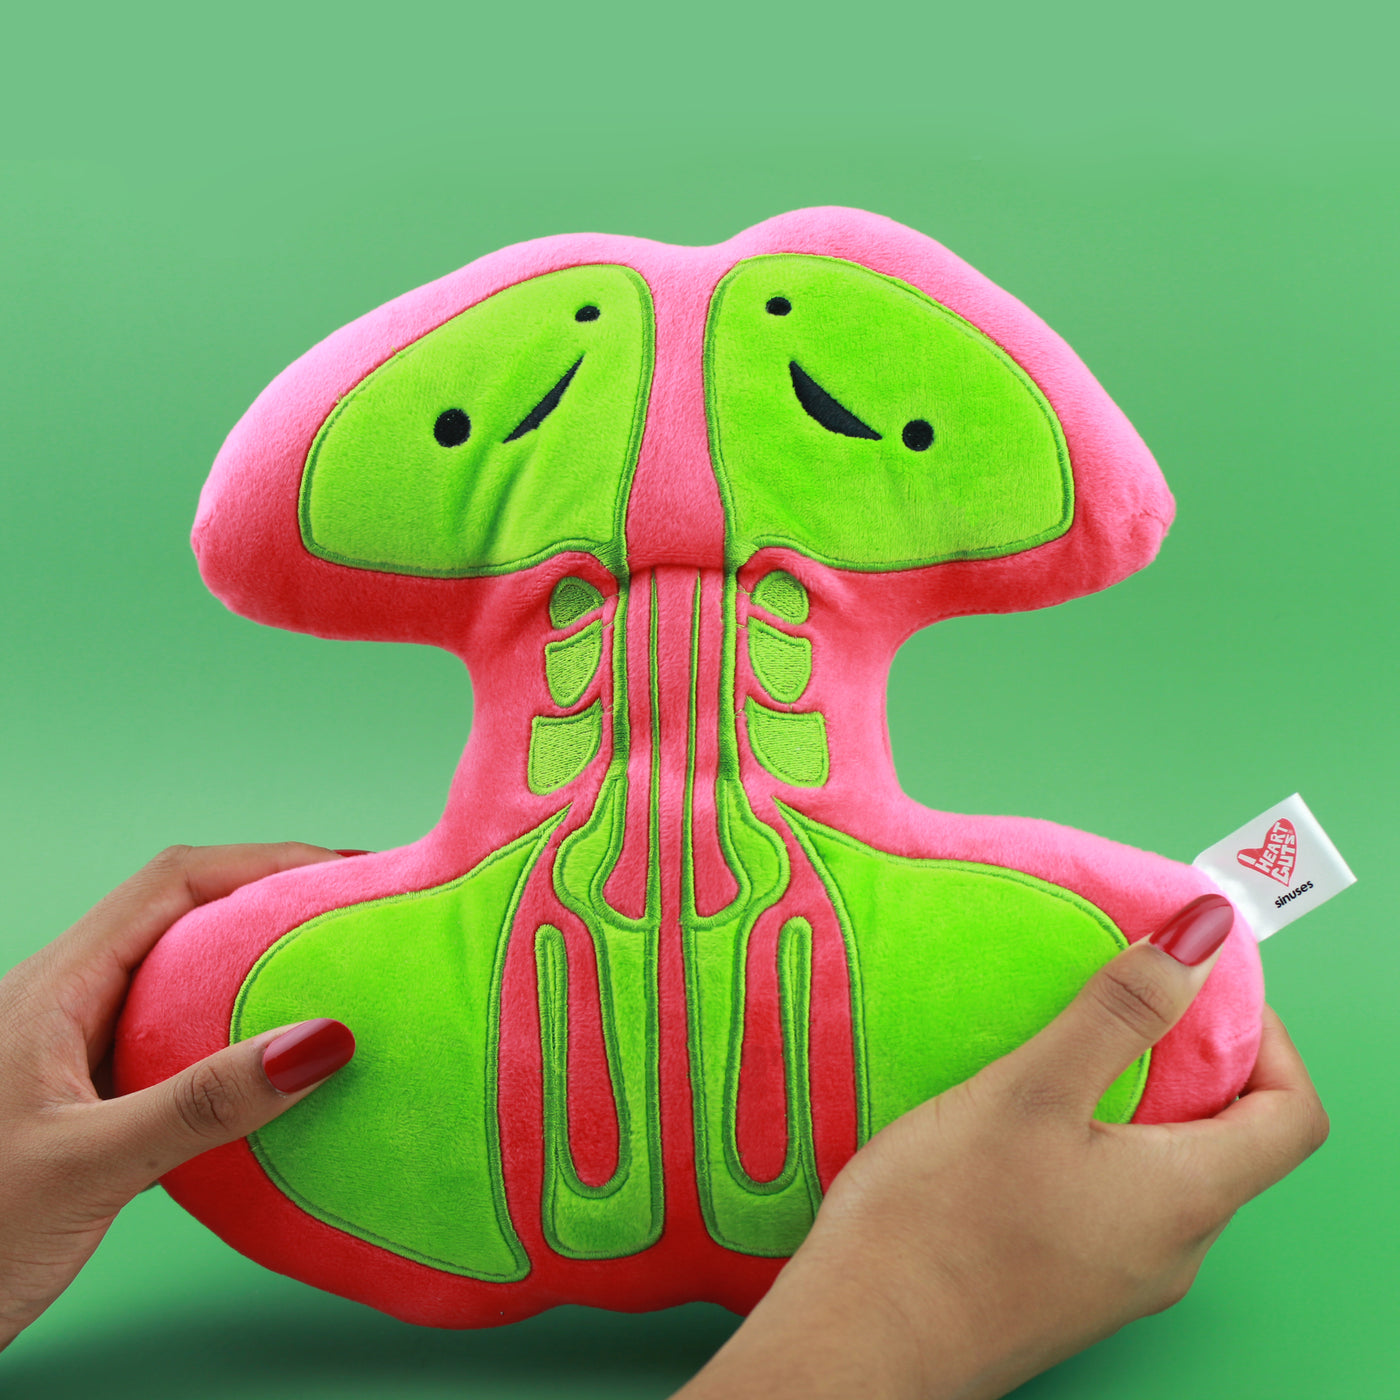 Sinus Plush - Breathing Buddies - Plush Organ Stuffed Toy Pillow - I Heart Guts